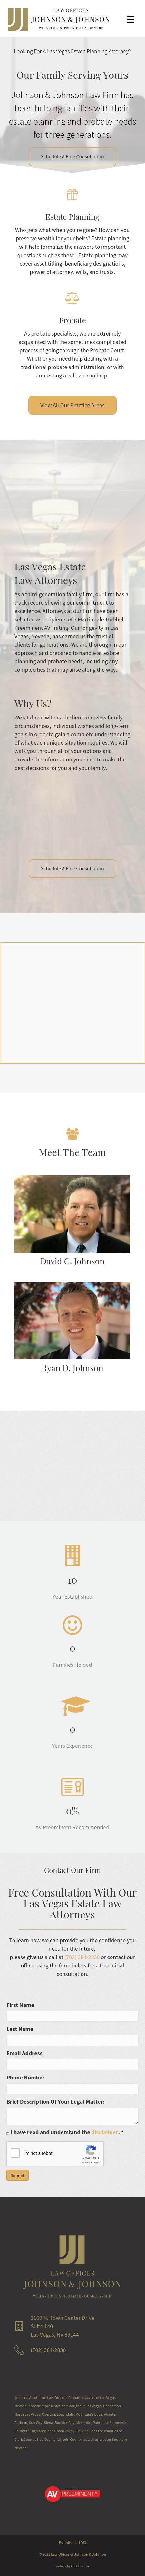 Johnson & Johnson Law Offices - Las Vegas NV Lawyers